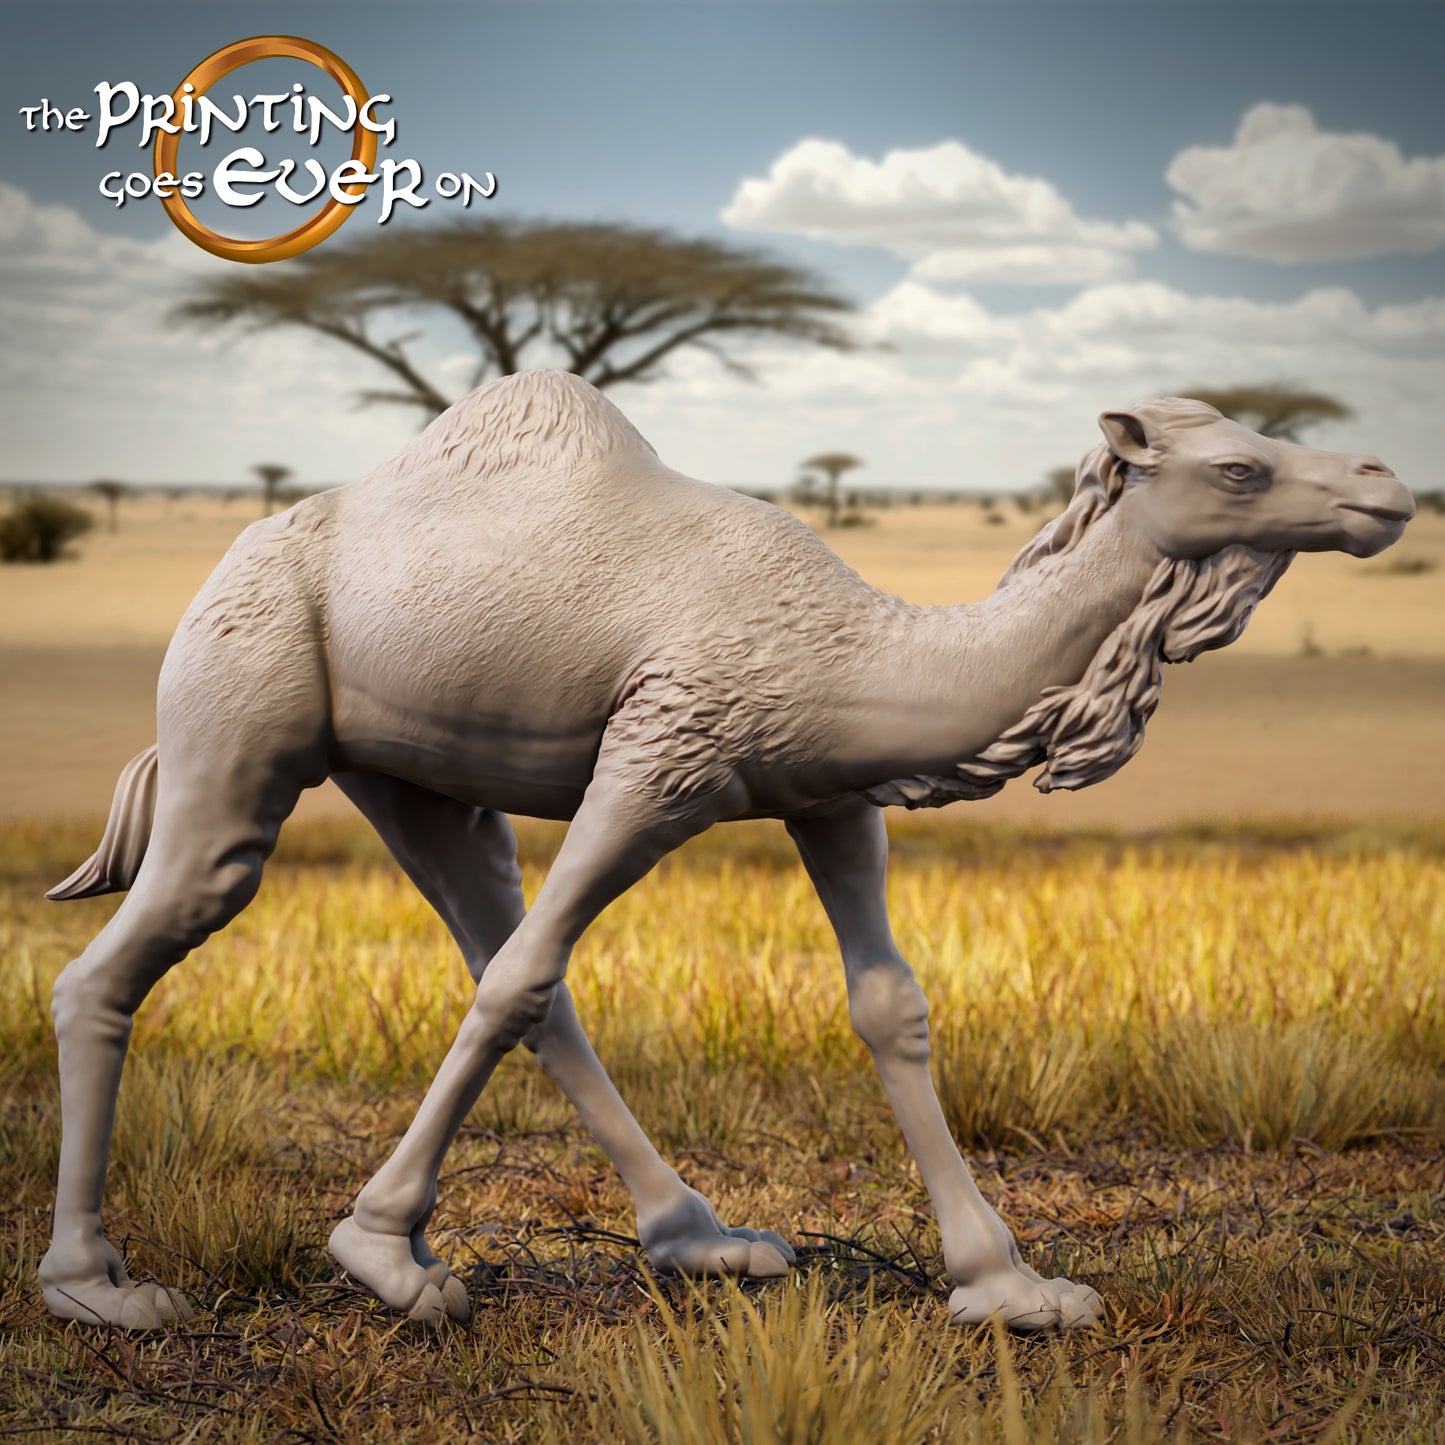 Produktfoto Tabletop 28mm The Printing Goes Ever On (TPGEO)  0: Kamel: Treues Nutztier aus der Wüste